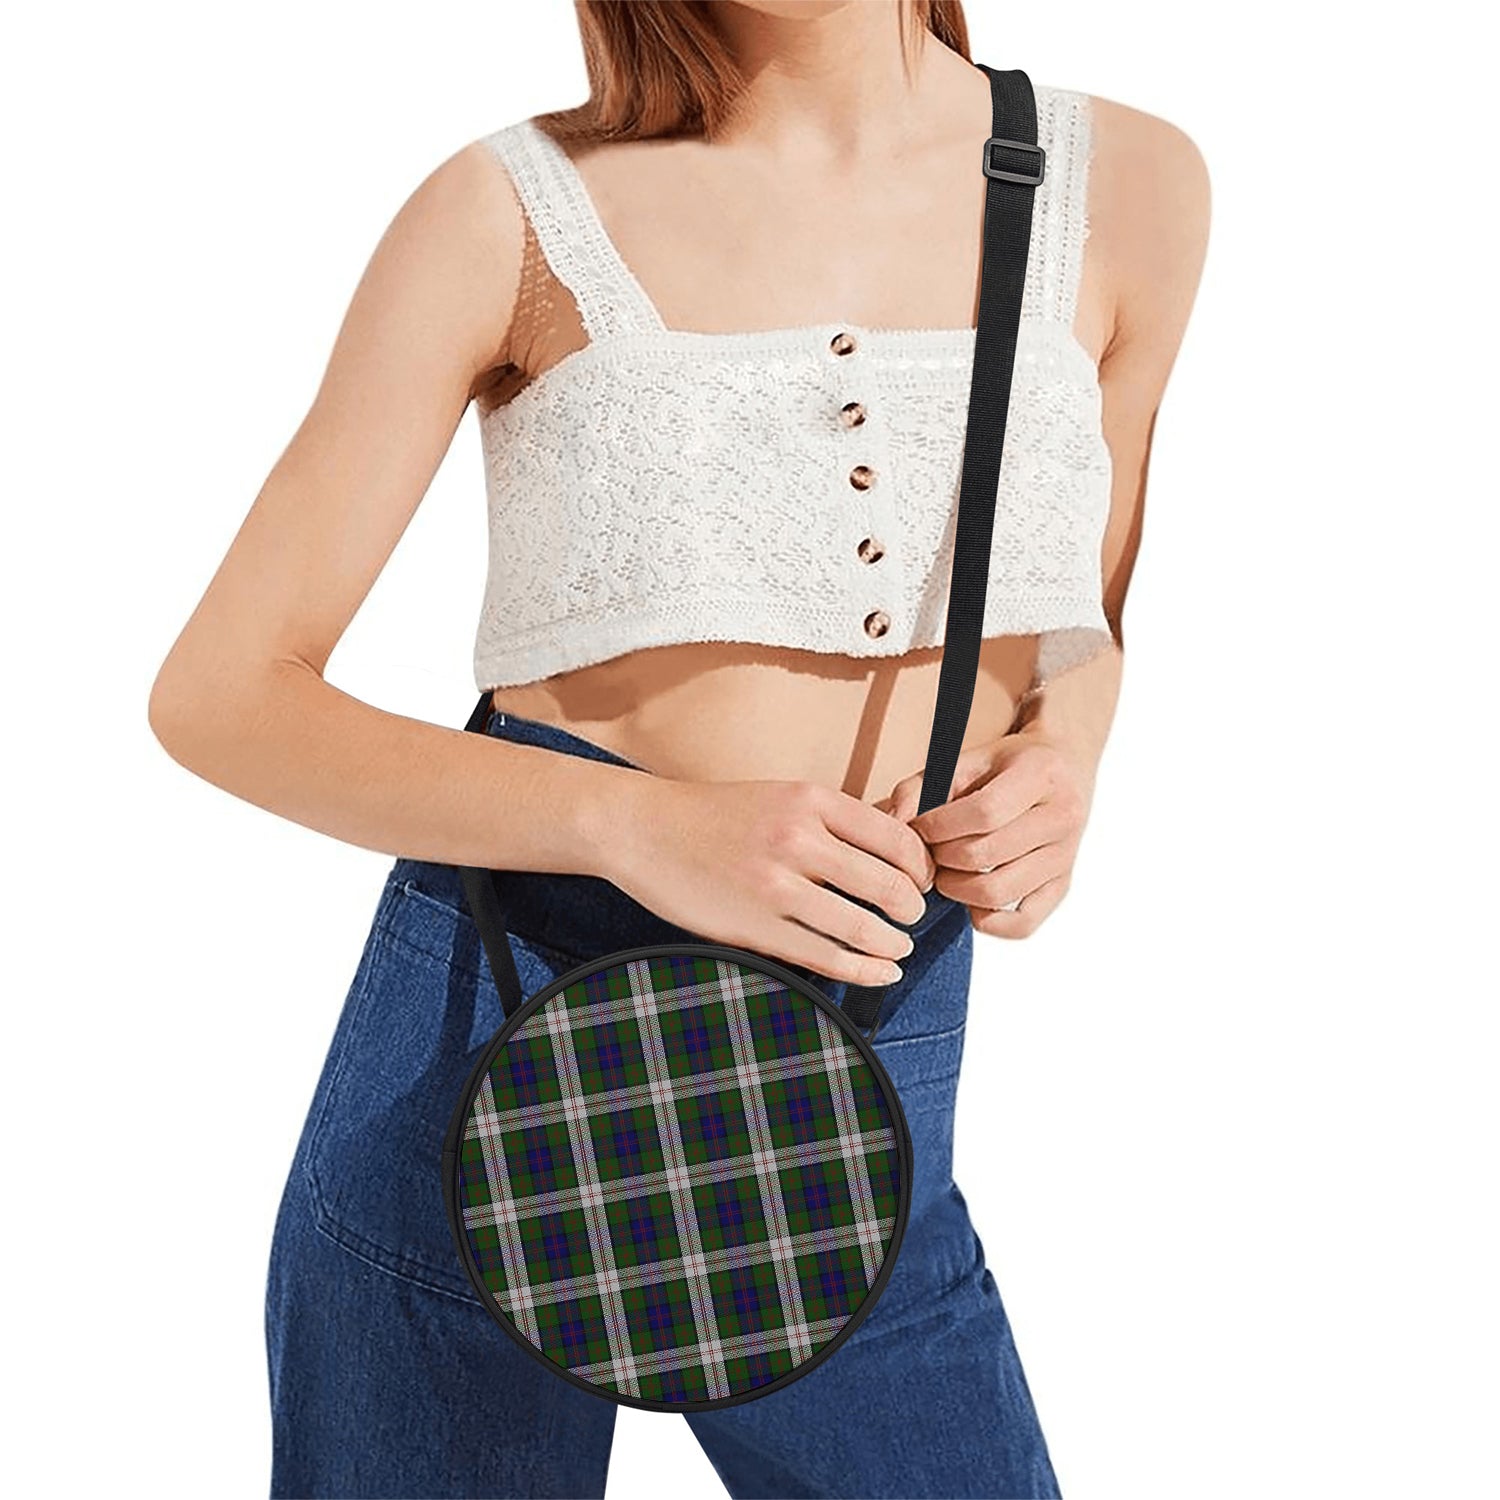 Blair Dress Tartan Round Satchel Bags One Size 9*9*2.7 inch - Tartanvibesclothing